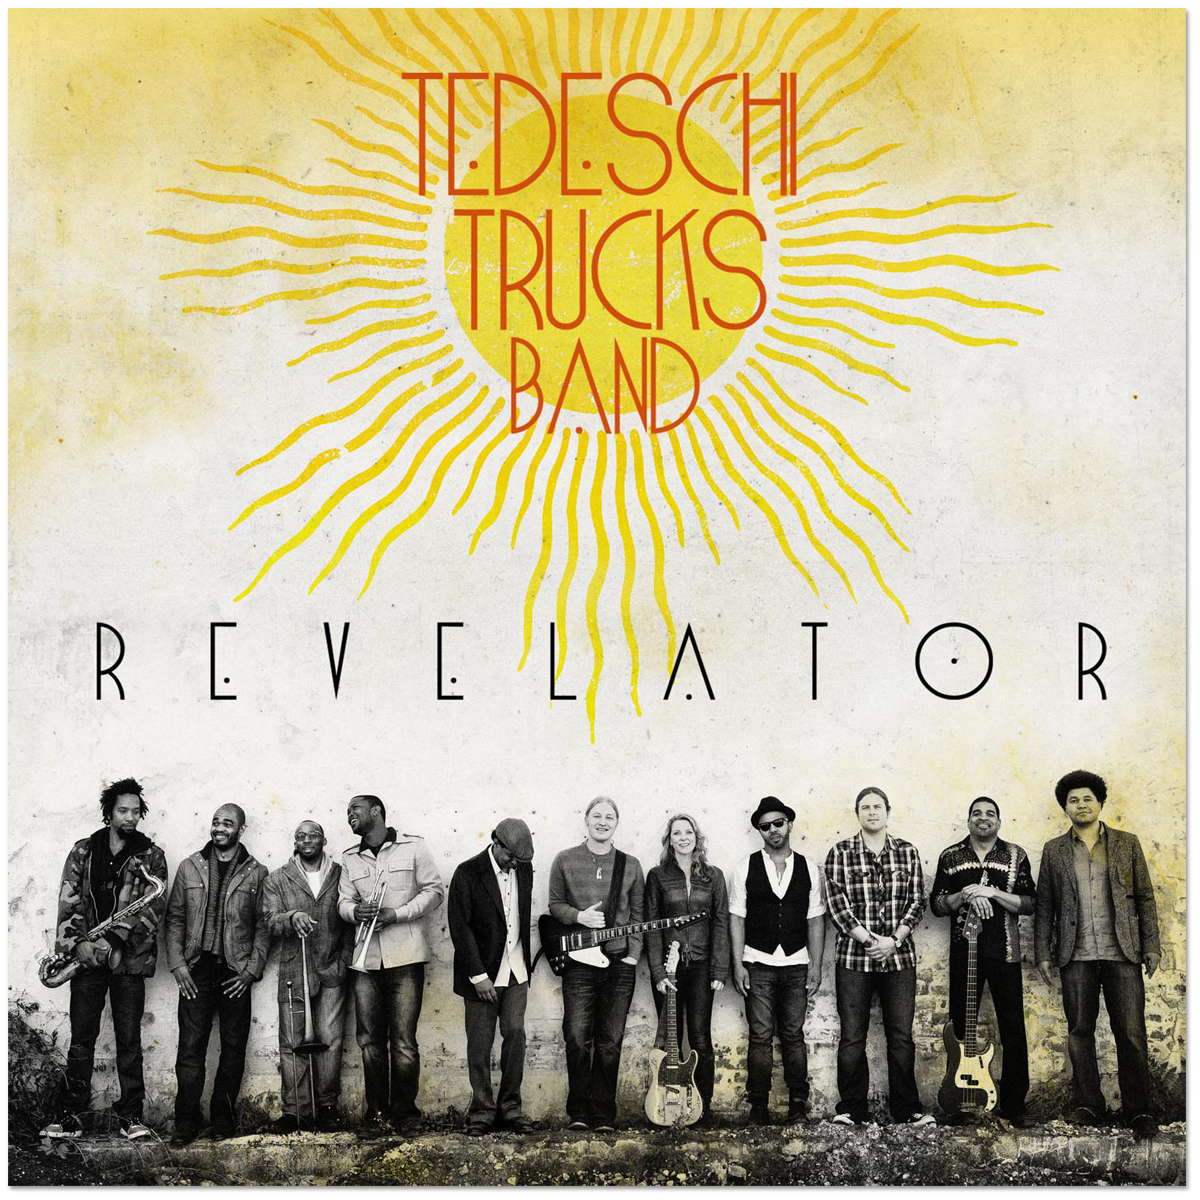 Tedeschi Trucks Band - Revelator (2011)